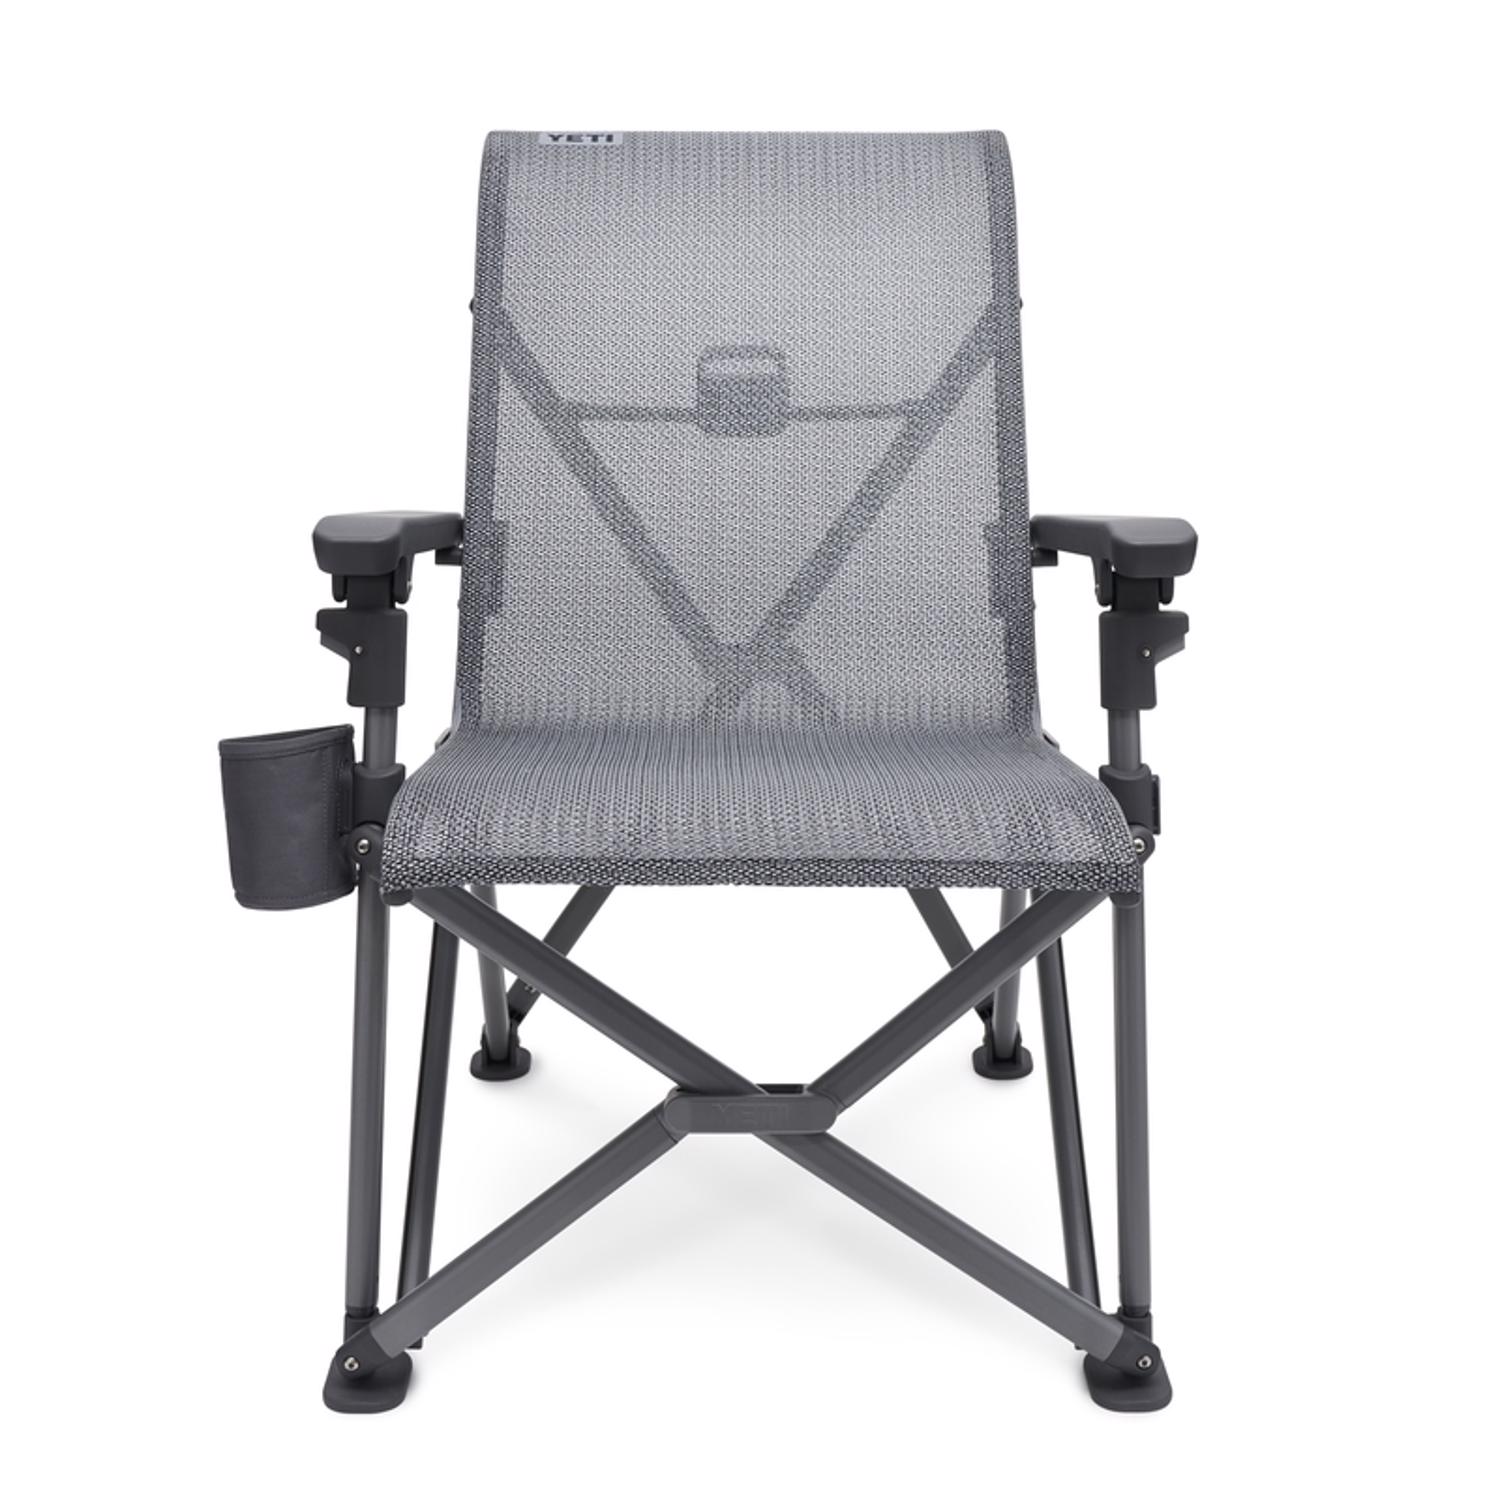 Photos - Garden Furniture Yeti Trailhead Brown/Black Polypropylene Frame Camping Chair Charcoal 2601 